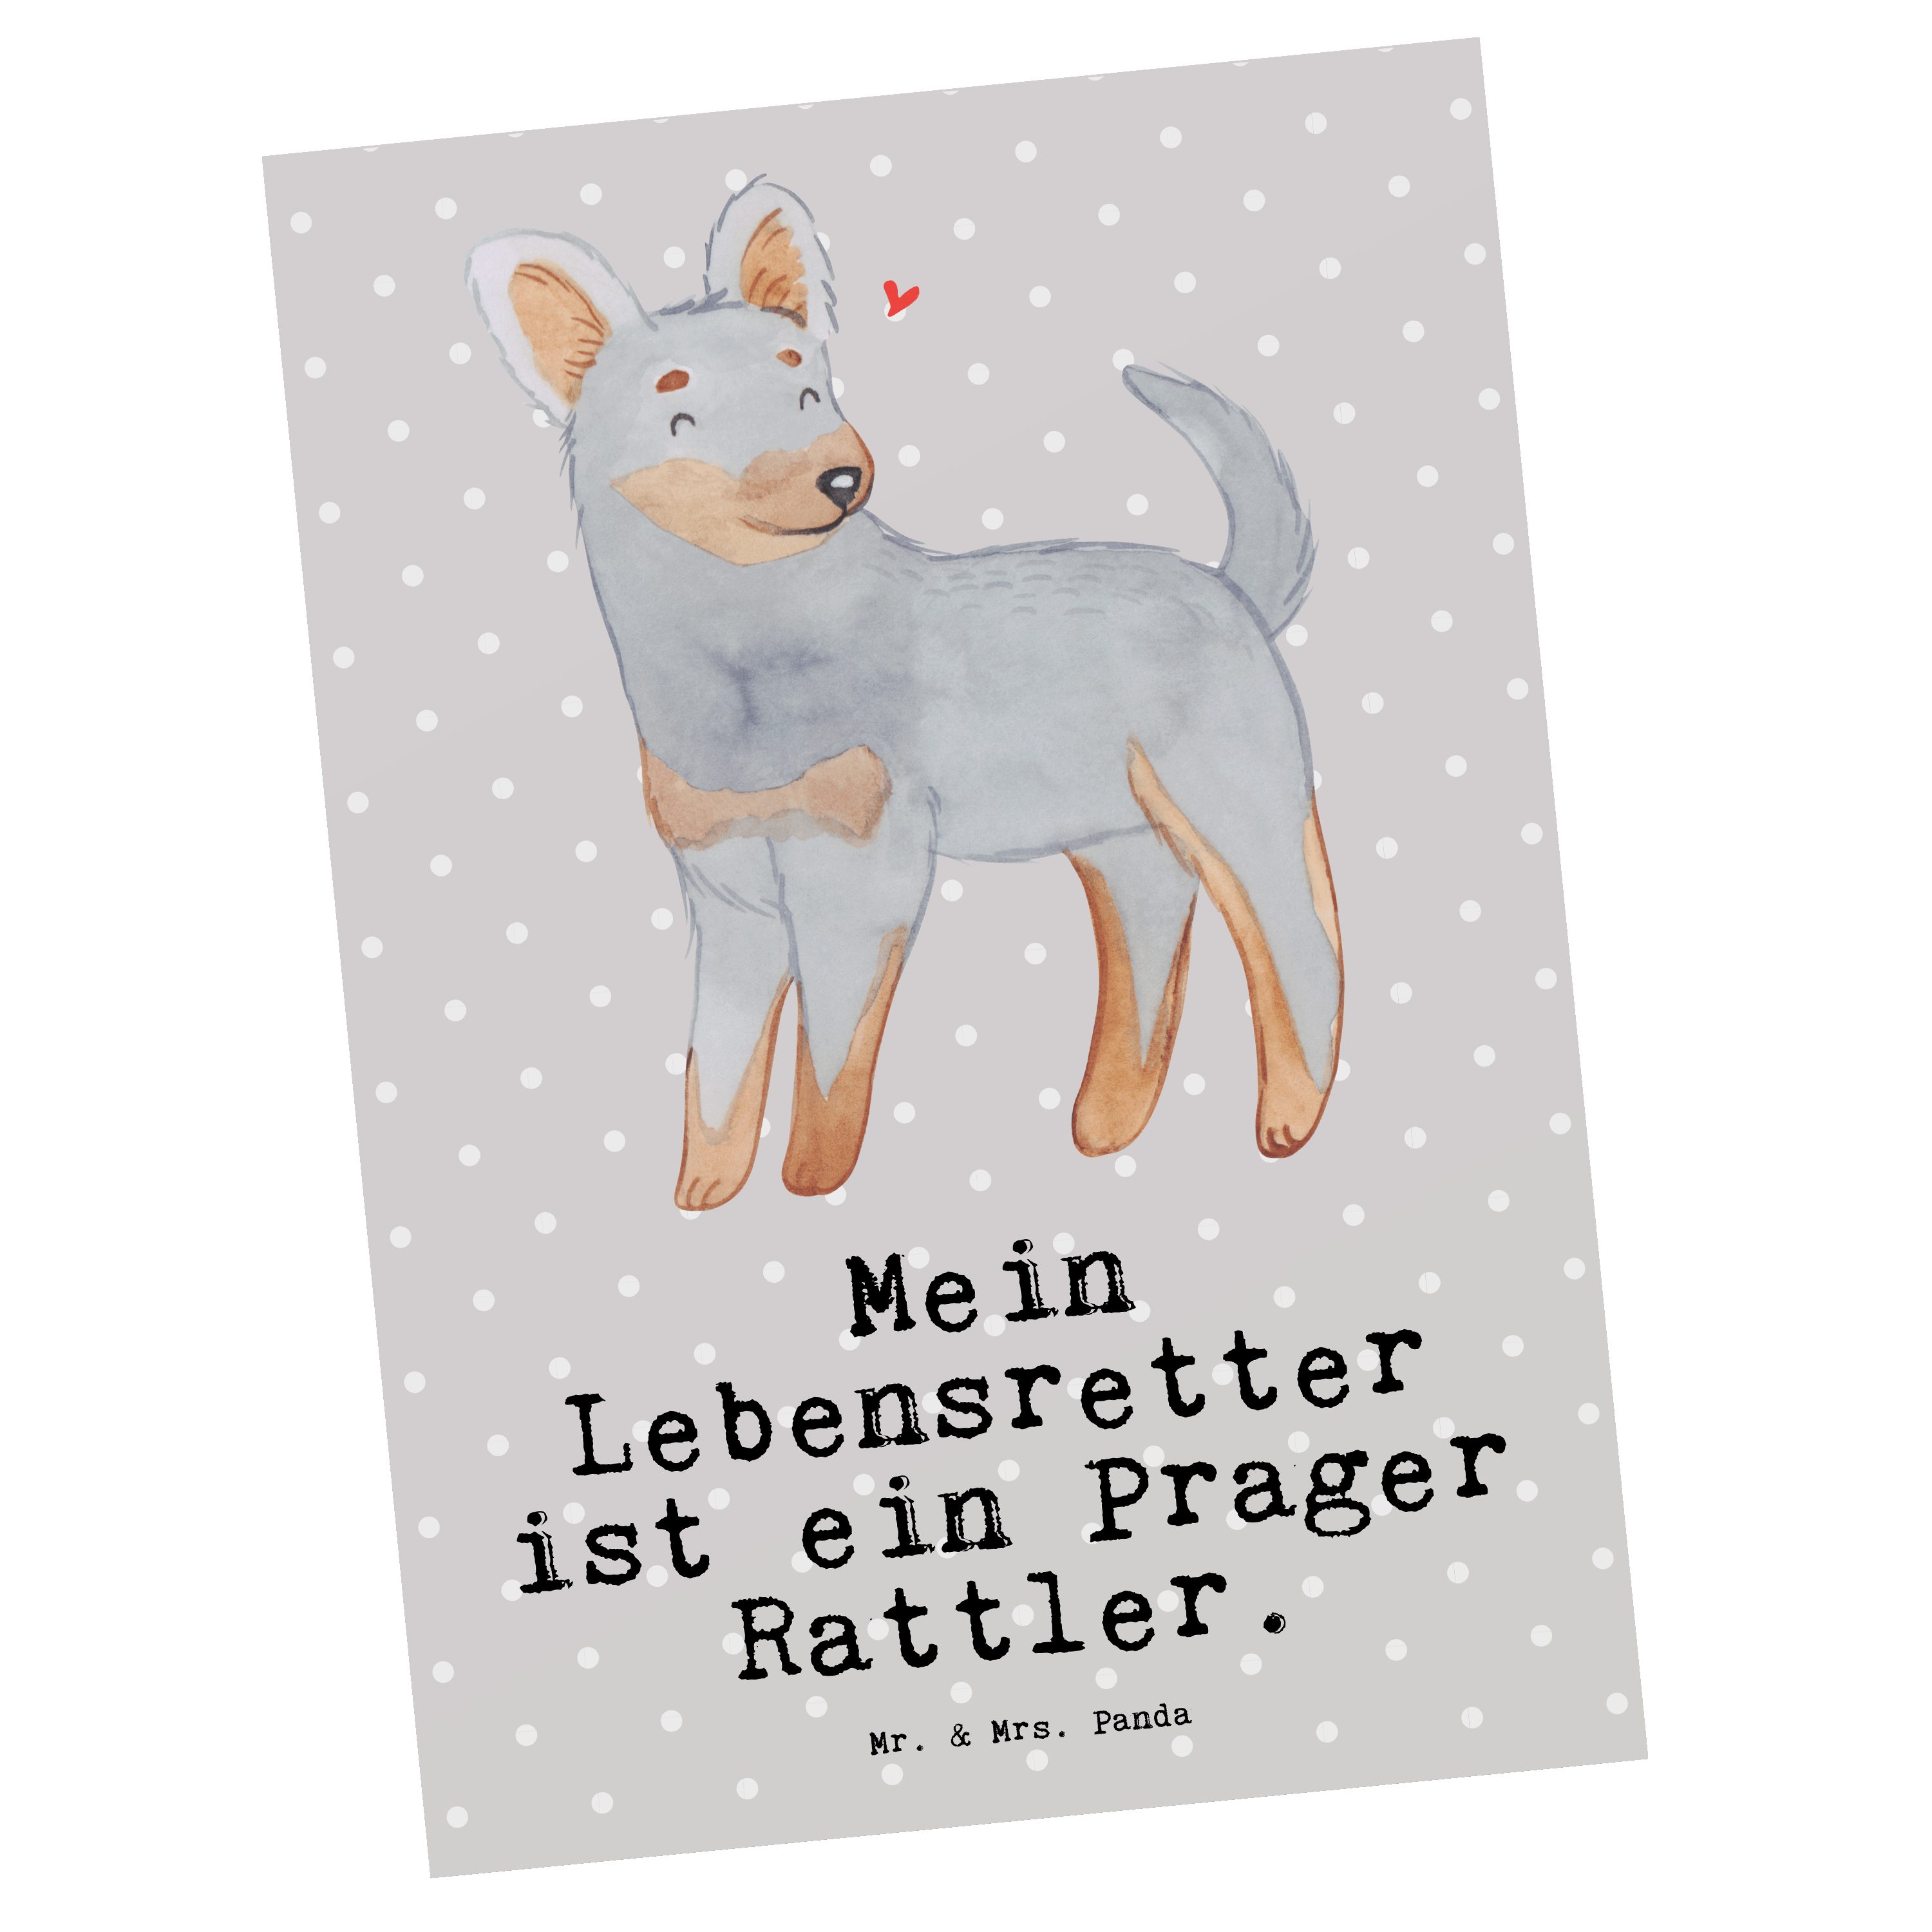 Mr. & Mrs. Panda Postkarte Prager Rattler Lebensretter - Grau Pastell - Geschenk, Rassehund, Hun